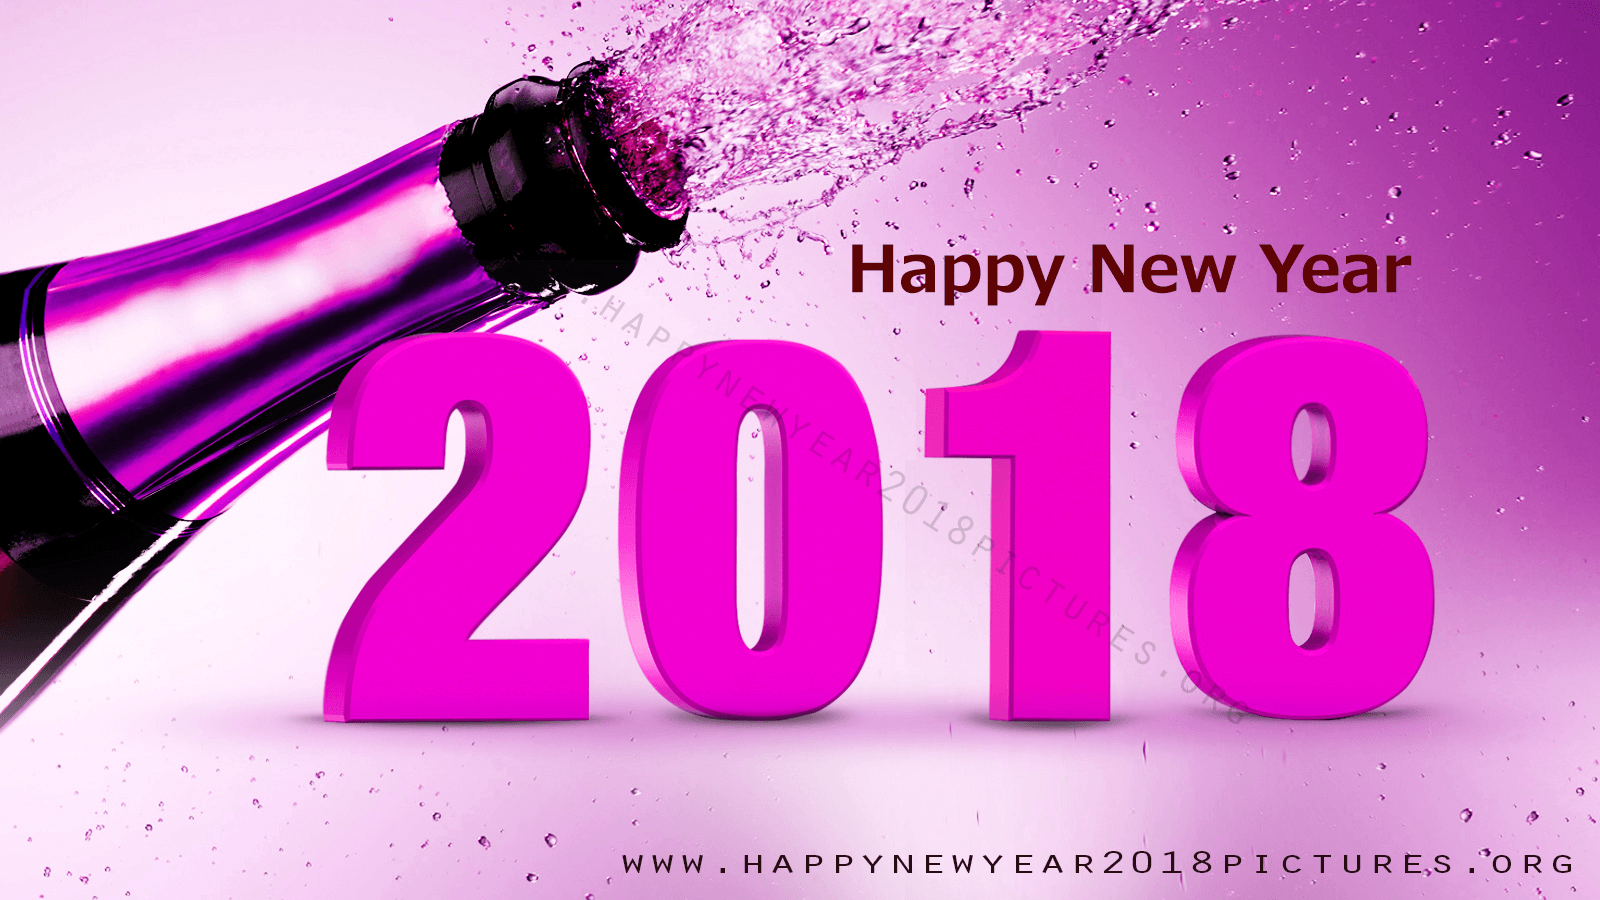 Happy New Year 2018 Photo for Whtsapp